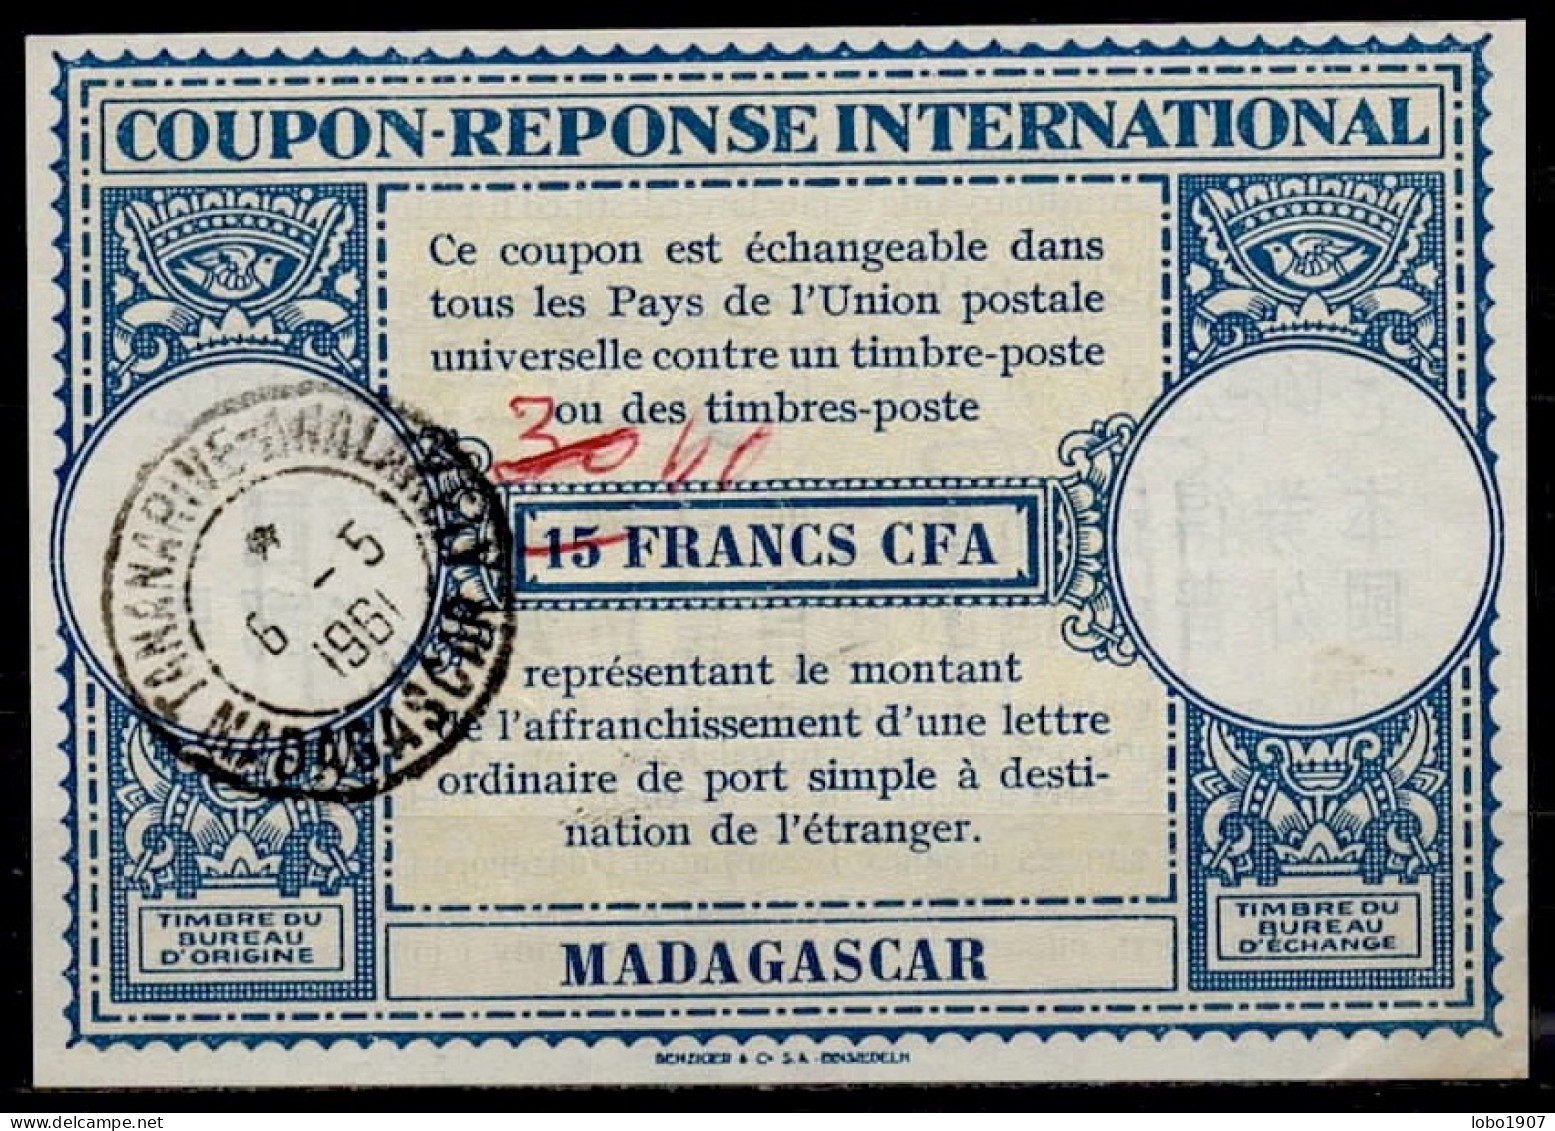 MADAGASCAR  Lo15  40 / 30 / 15 FRANCS CFA Int. Reply Coupon Reponse Antwortschein IRC IAS TANANARIVE ANALAKELY 06.05.61 - Brieven En Documenten